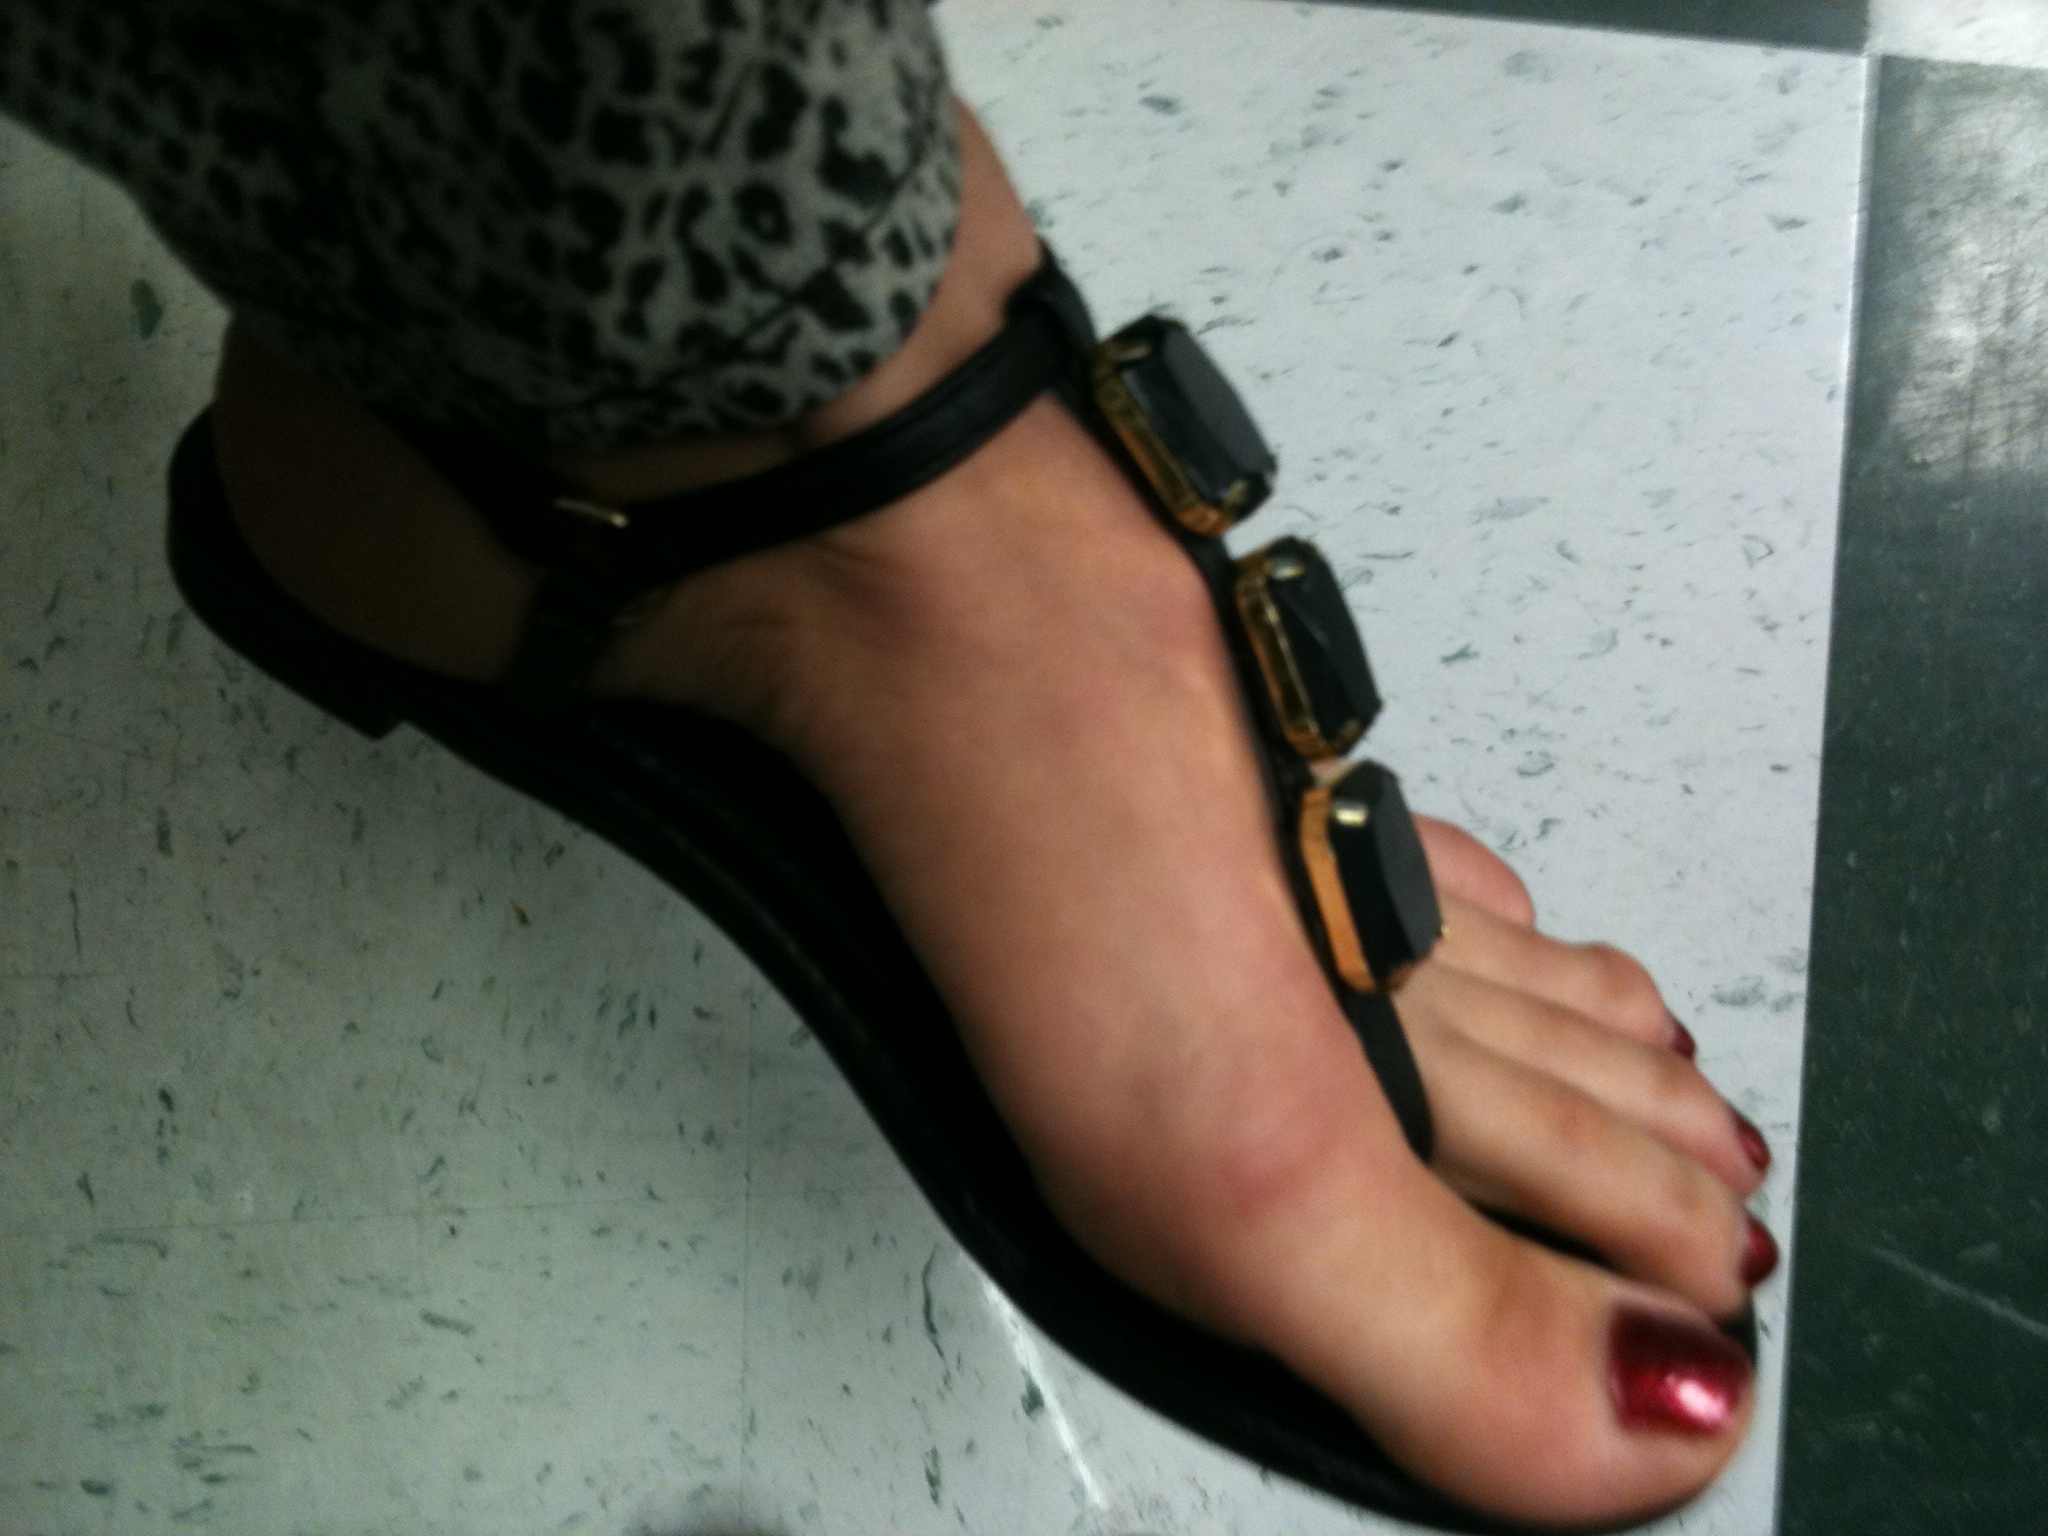 Feet jayma mays Hot Property: